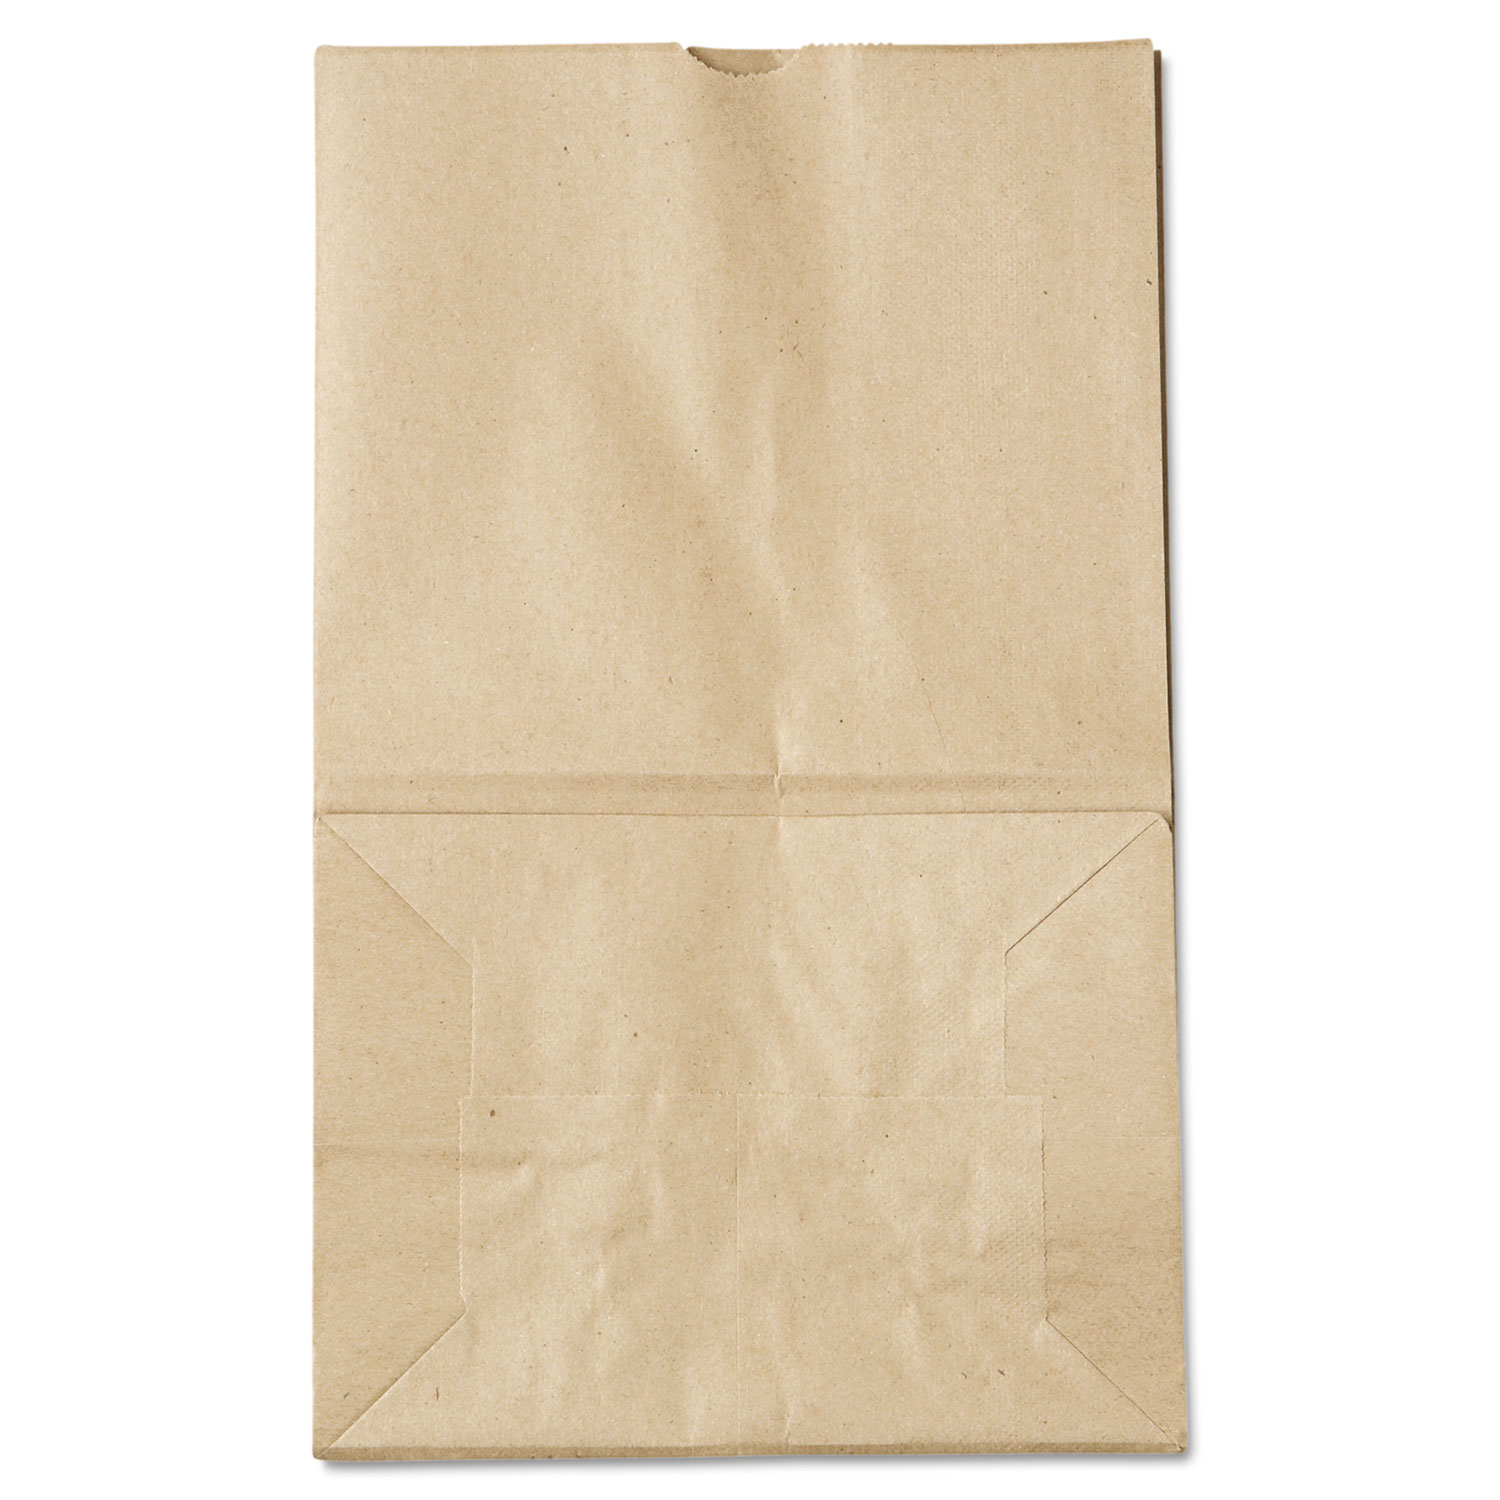 #20 Squat Paper Grocery Bag, 40lb Kraft, Std 8 1/4 x 5 15/16 x 13 3/8, 500 bags